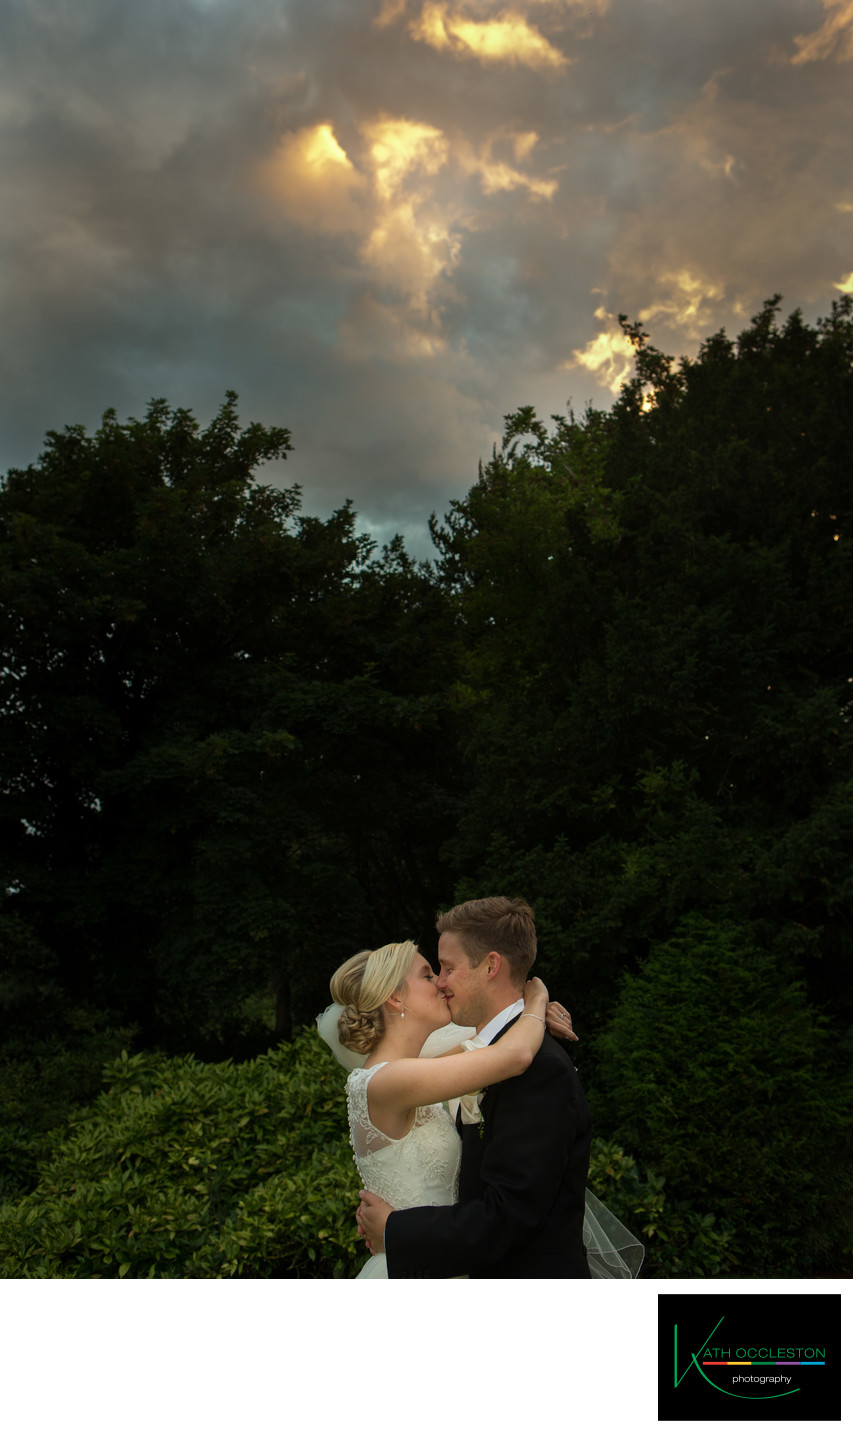 Couple at sunset at The Villa Wrea Green